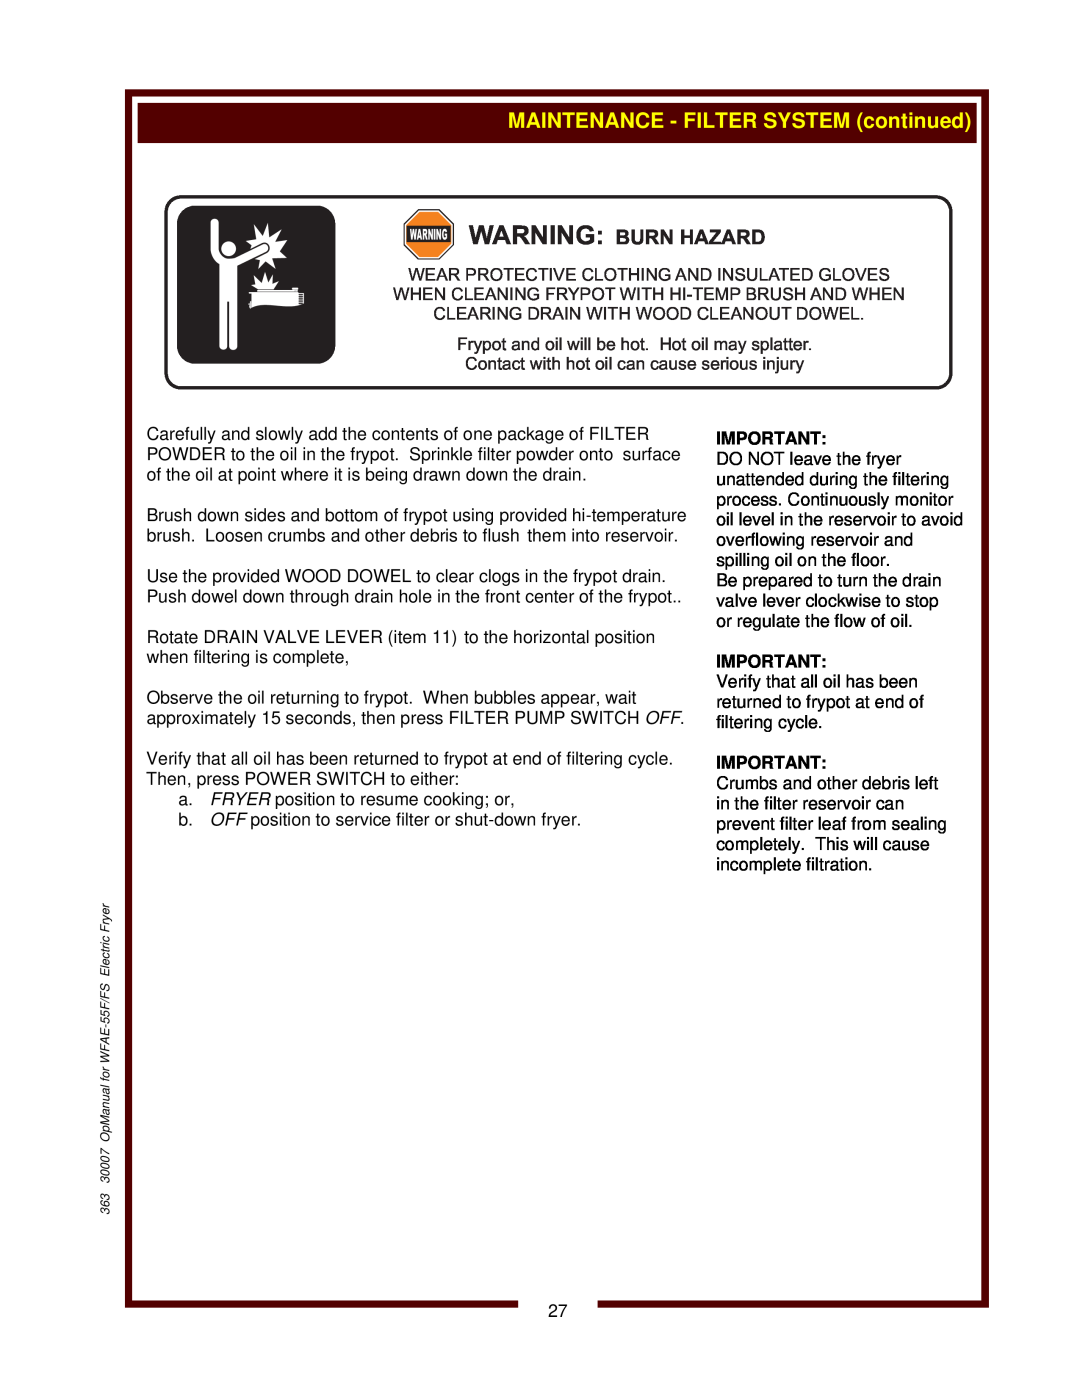 Bloomfield WFAE-55FS operation manual Warning Burn Hazard, Frypot and oil will be hot. Hot oil may splatter 